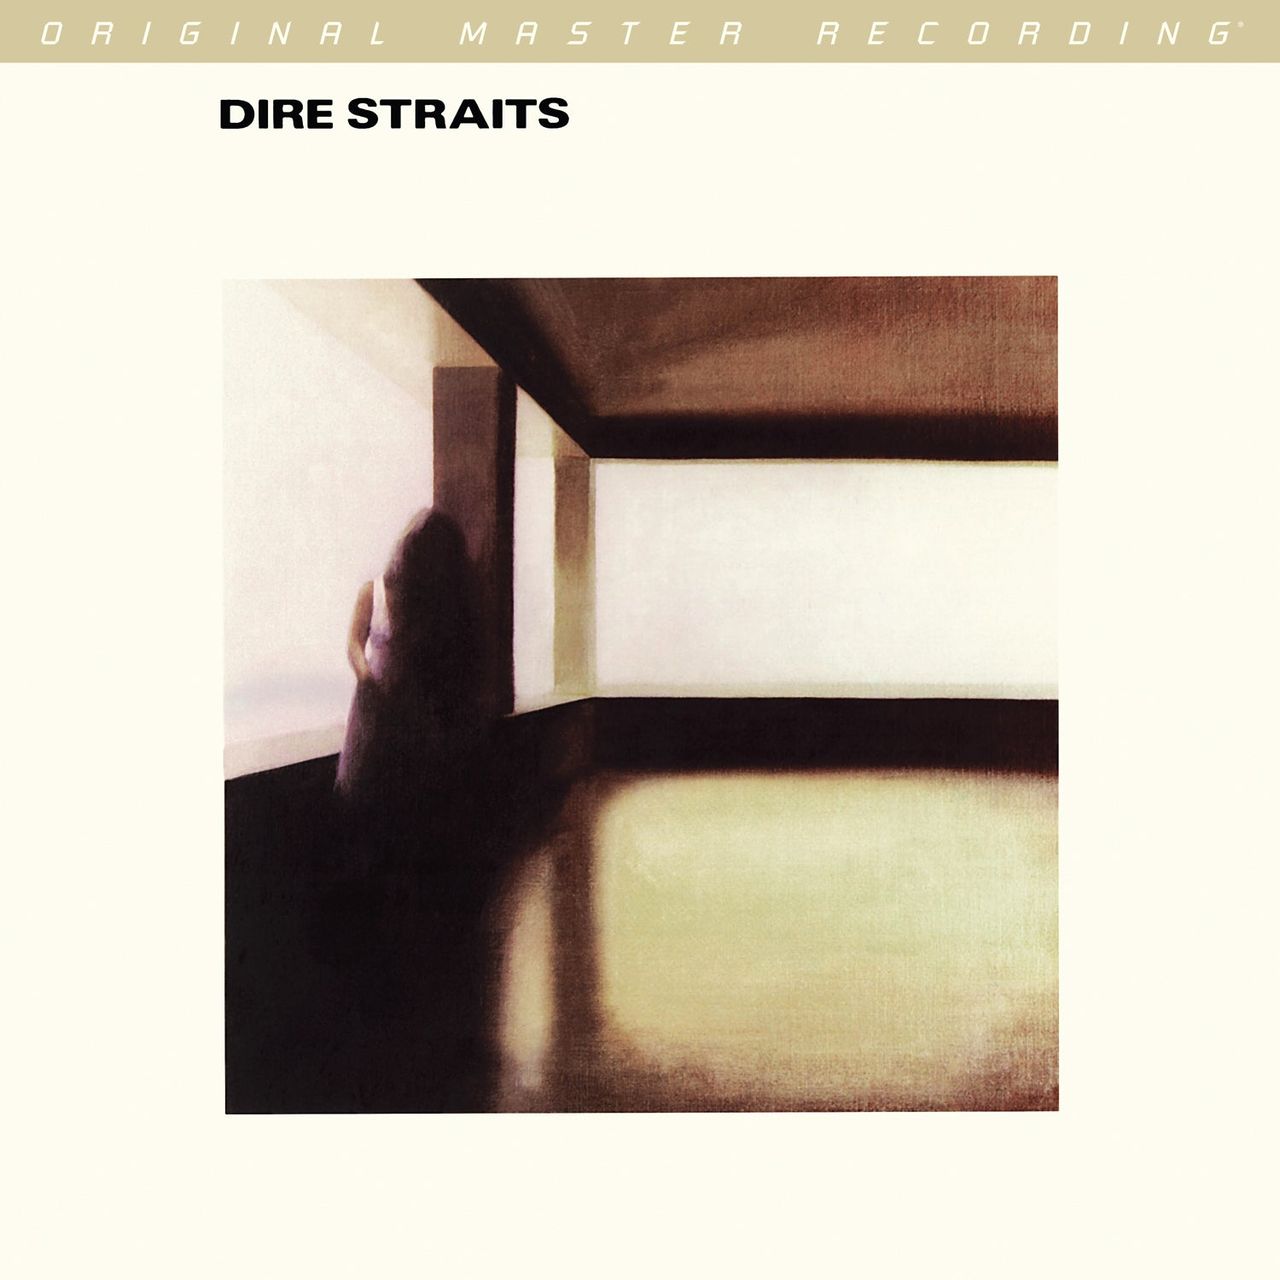 Dire Straits Dire Straits - Original Master Recording 180 Gram 45RPM - Sealed US 2-LP vinyl record set (Double LP Album) MFSL2-466